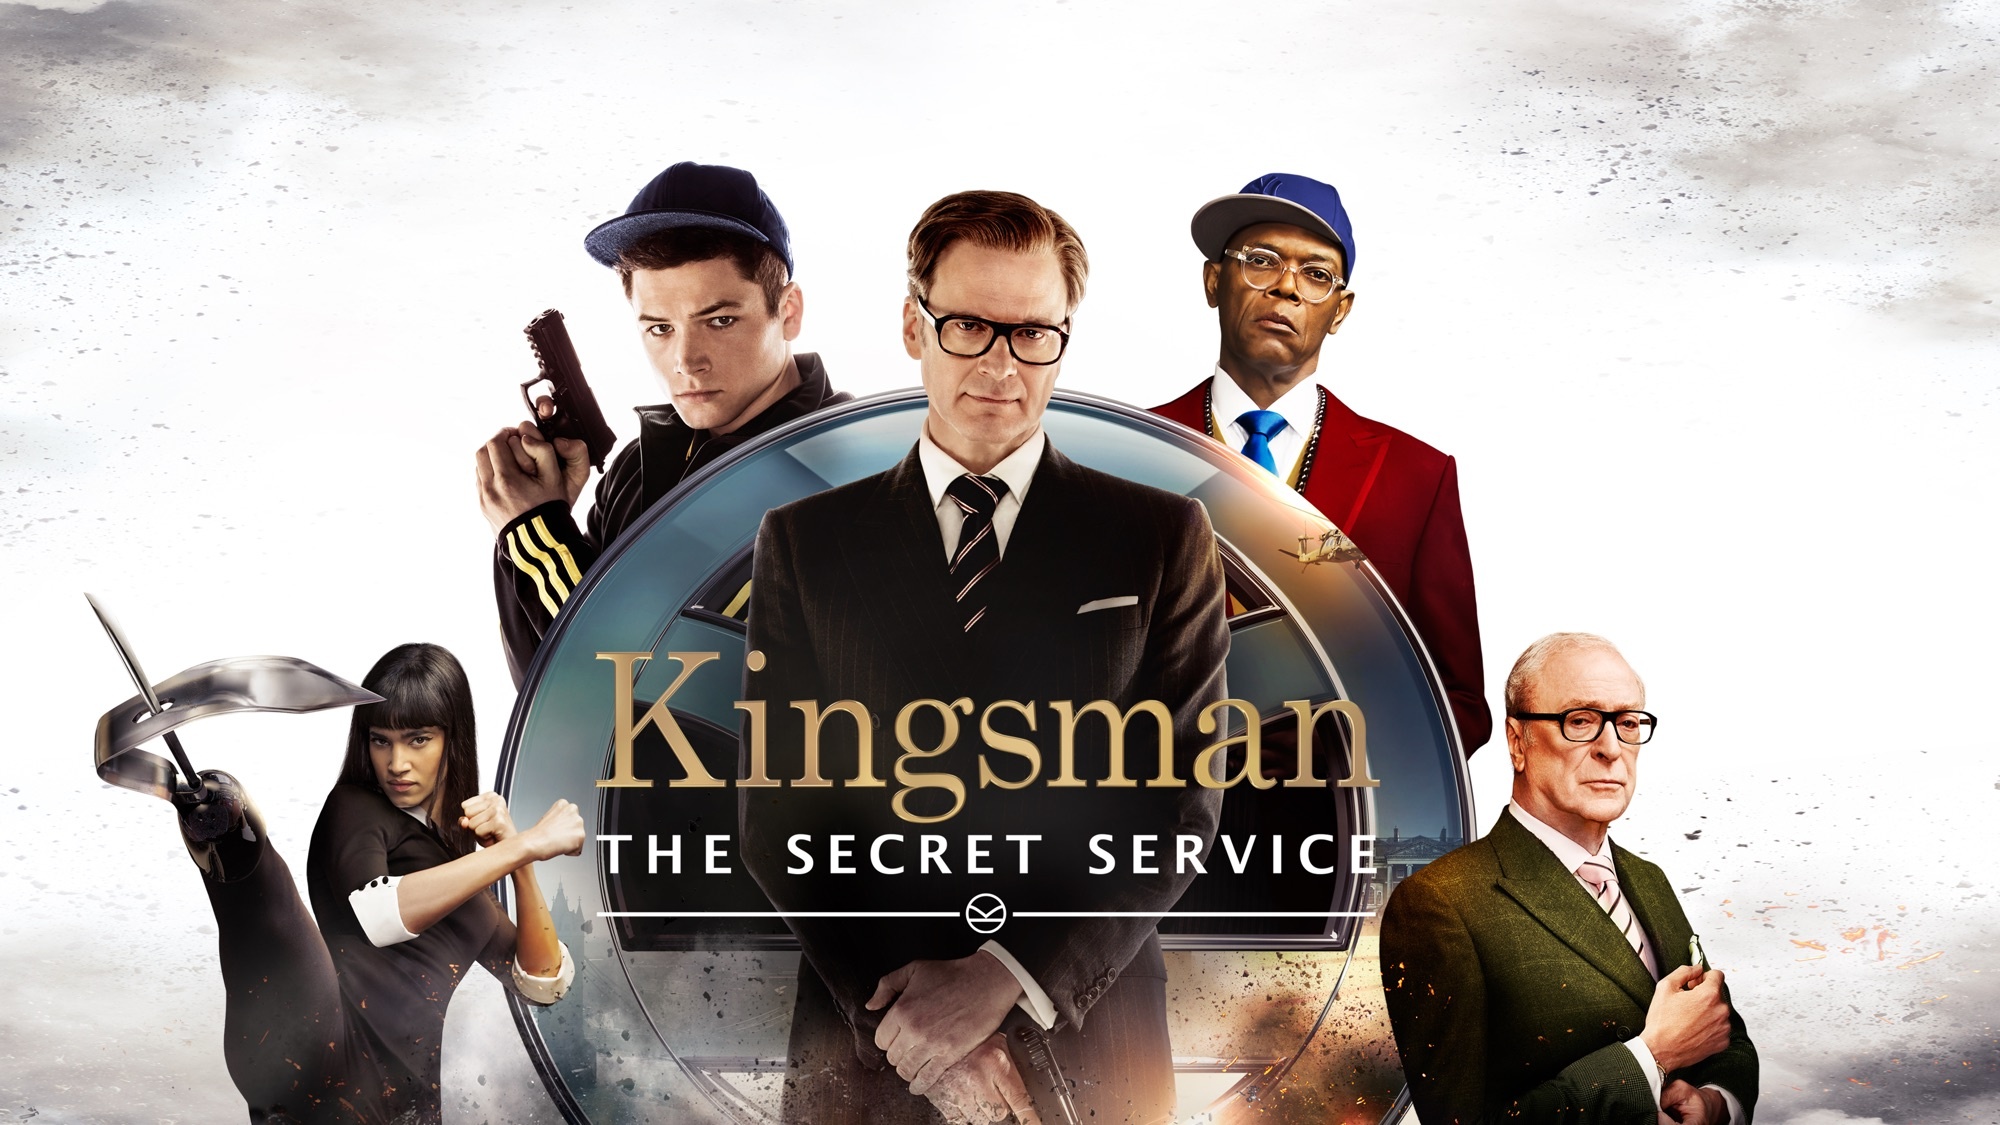 Kingsman wallpaper, HD background image, Movie poster, Stylish agents, 2000x1130 HD Desktop